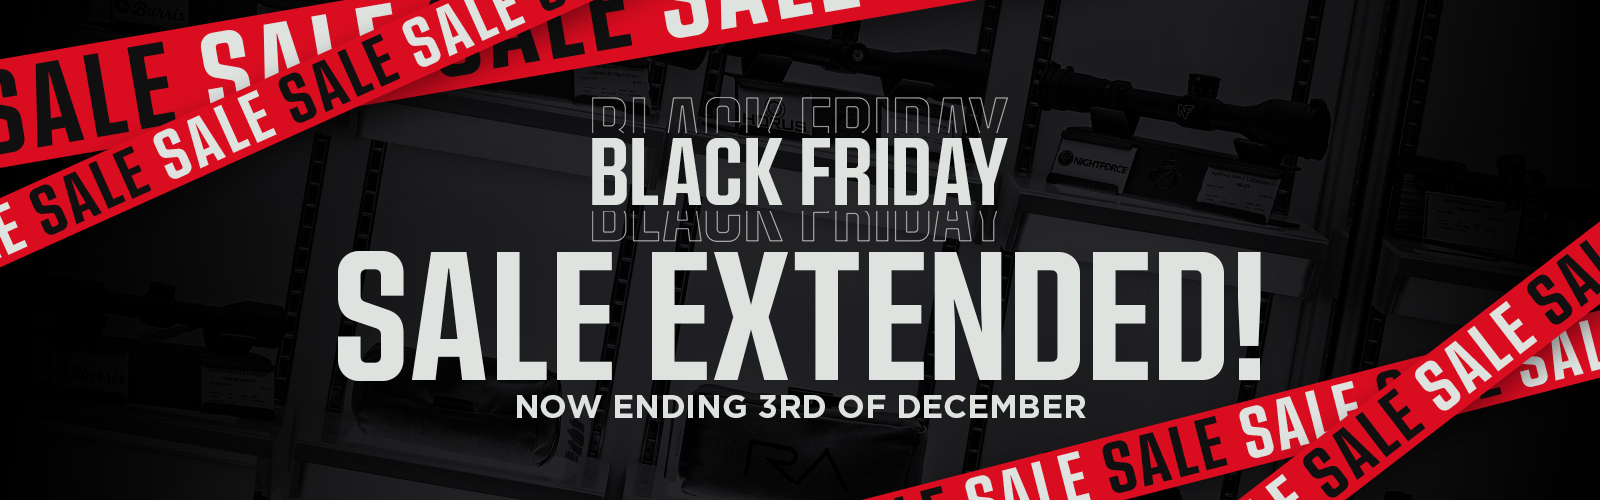 Black Friday - Extended